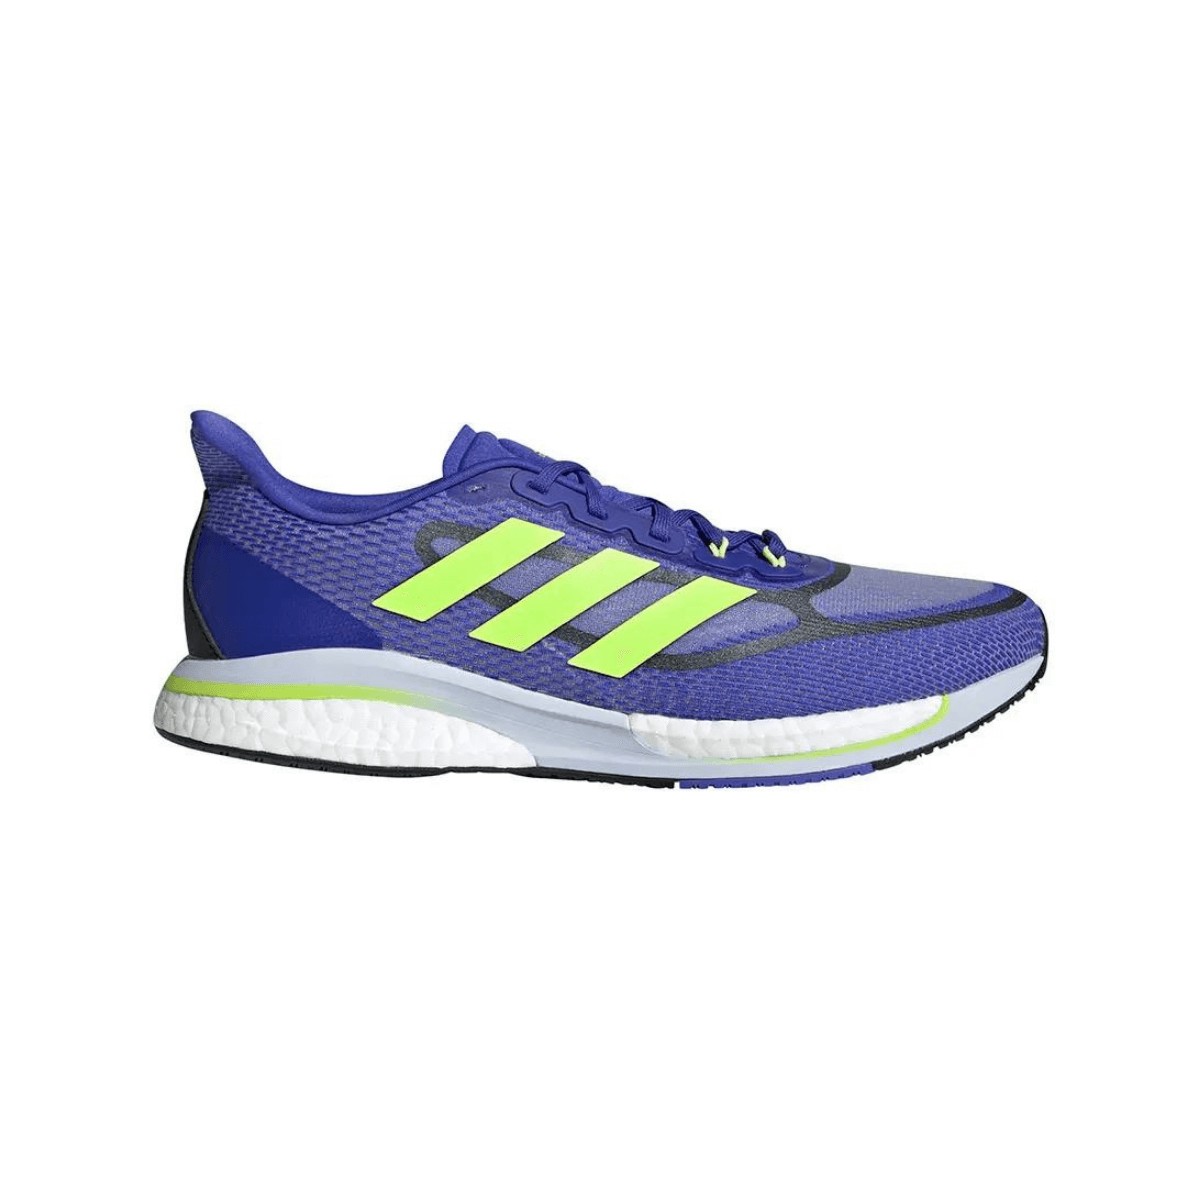 Chaussures Adidas Supernova + Bleu Vert AW21, Taille UK 11.5